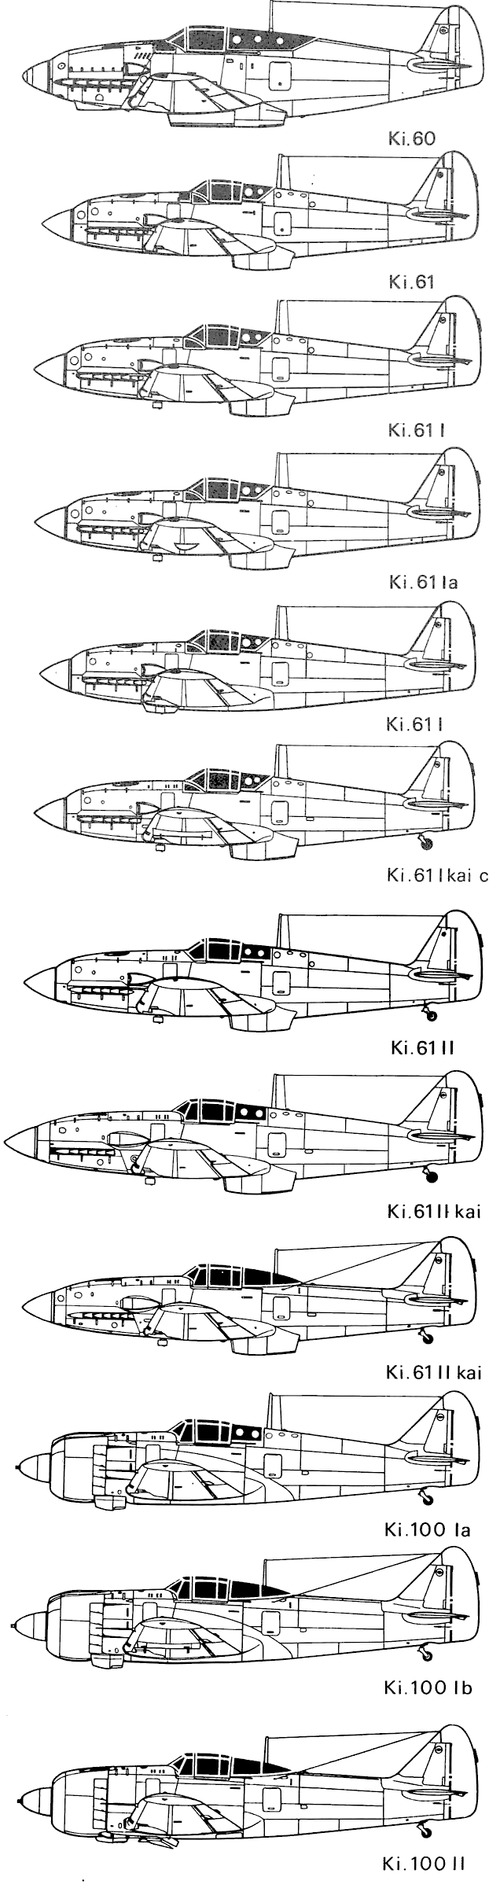 Kawasaki Ki-61 Hien [Tony]